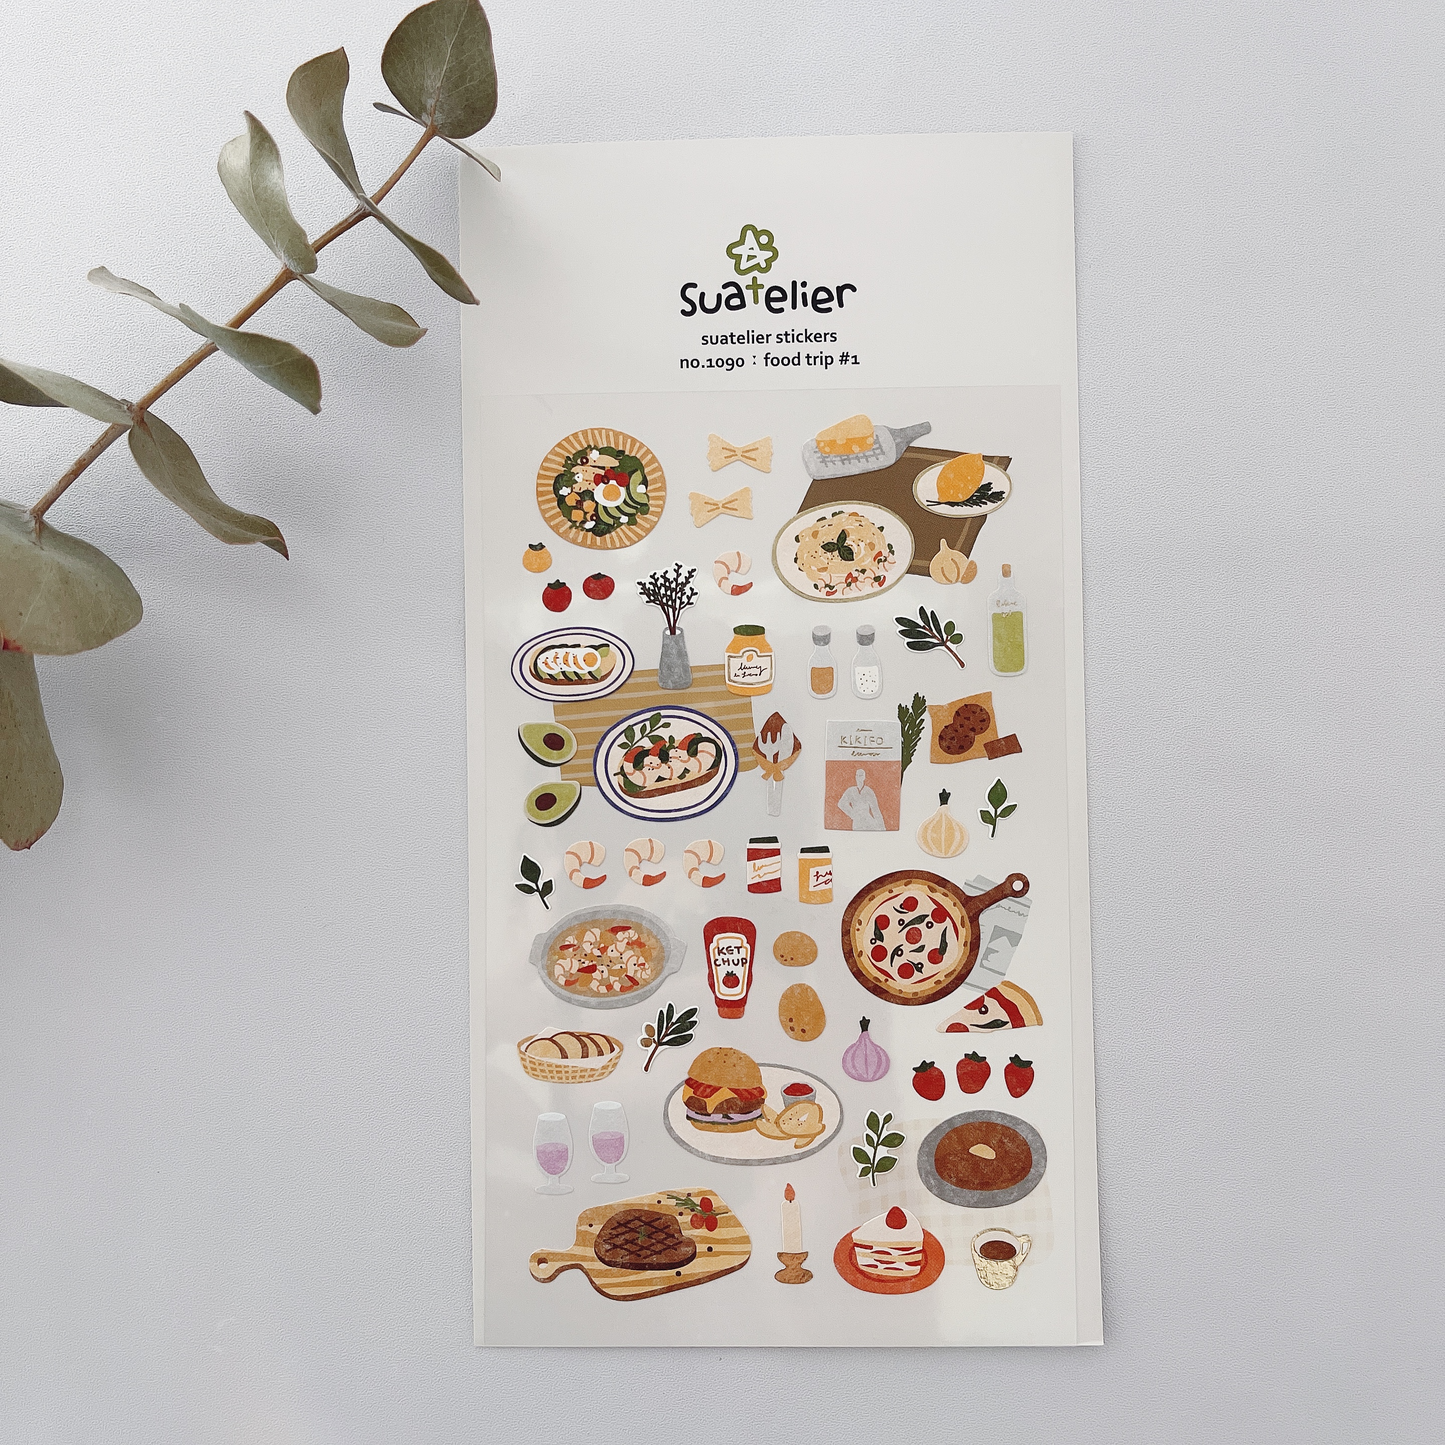 Suatelier Food Trip #1 Sticker // no. 1090